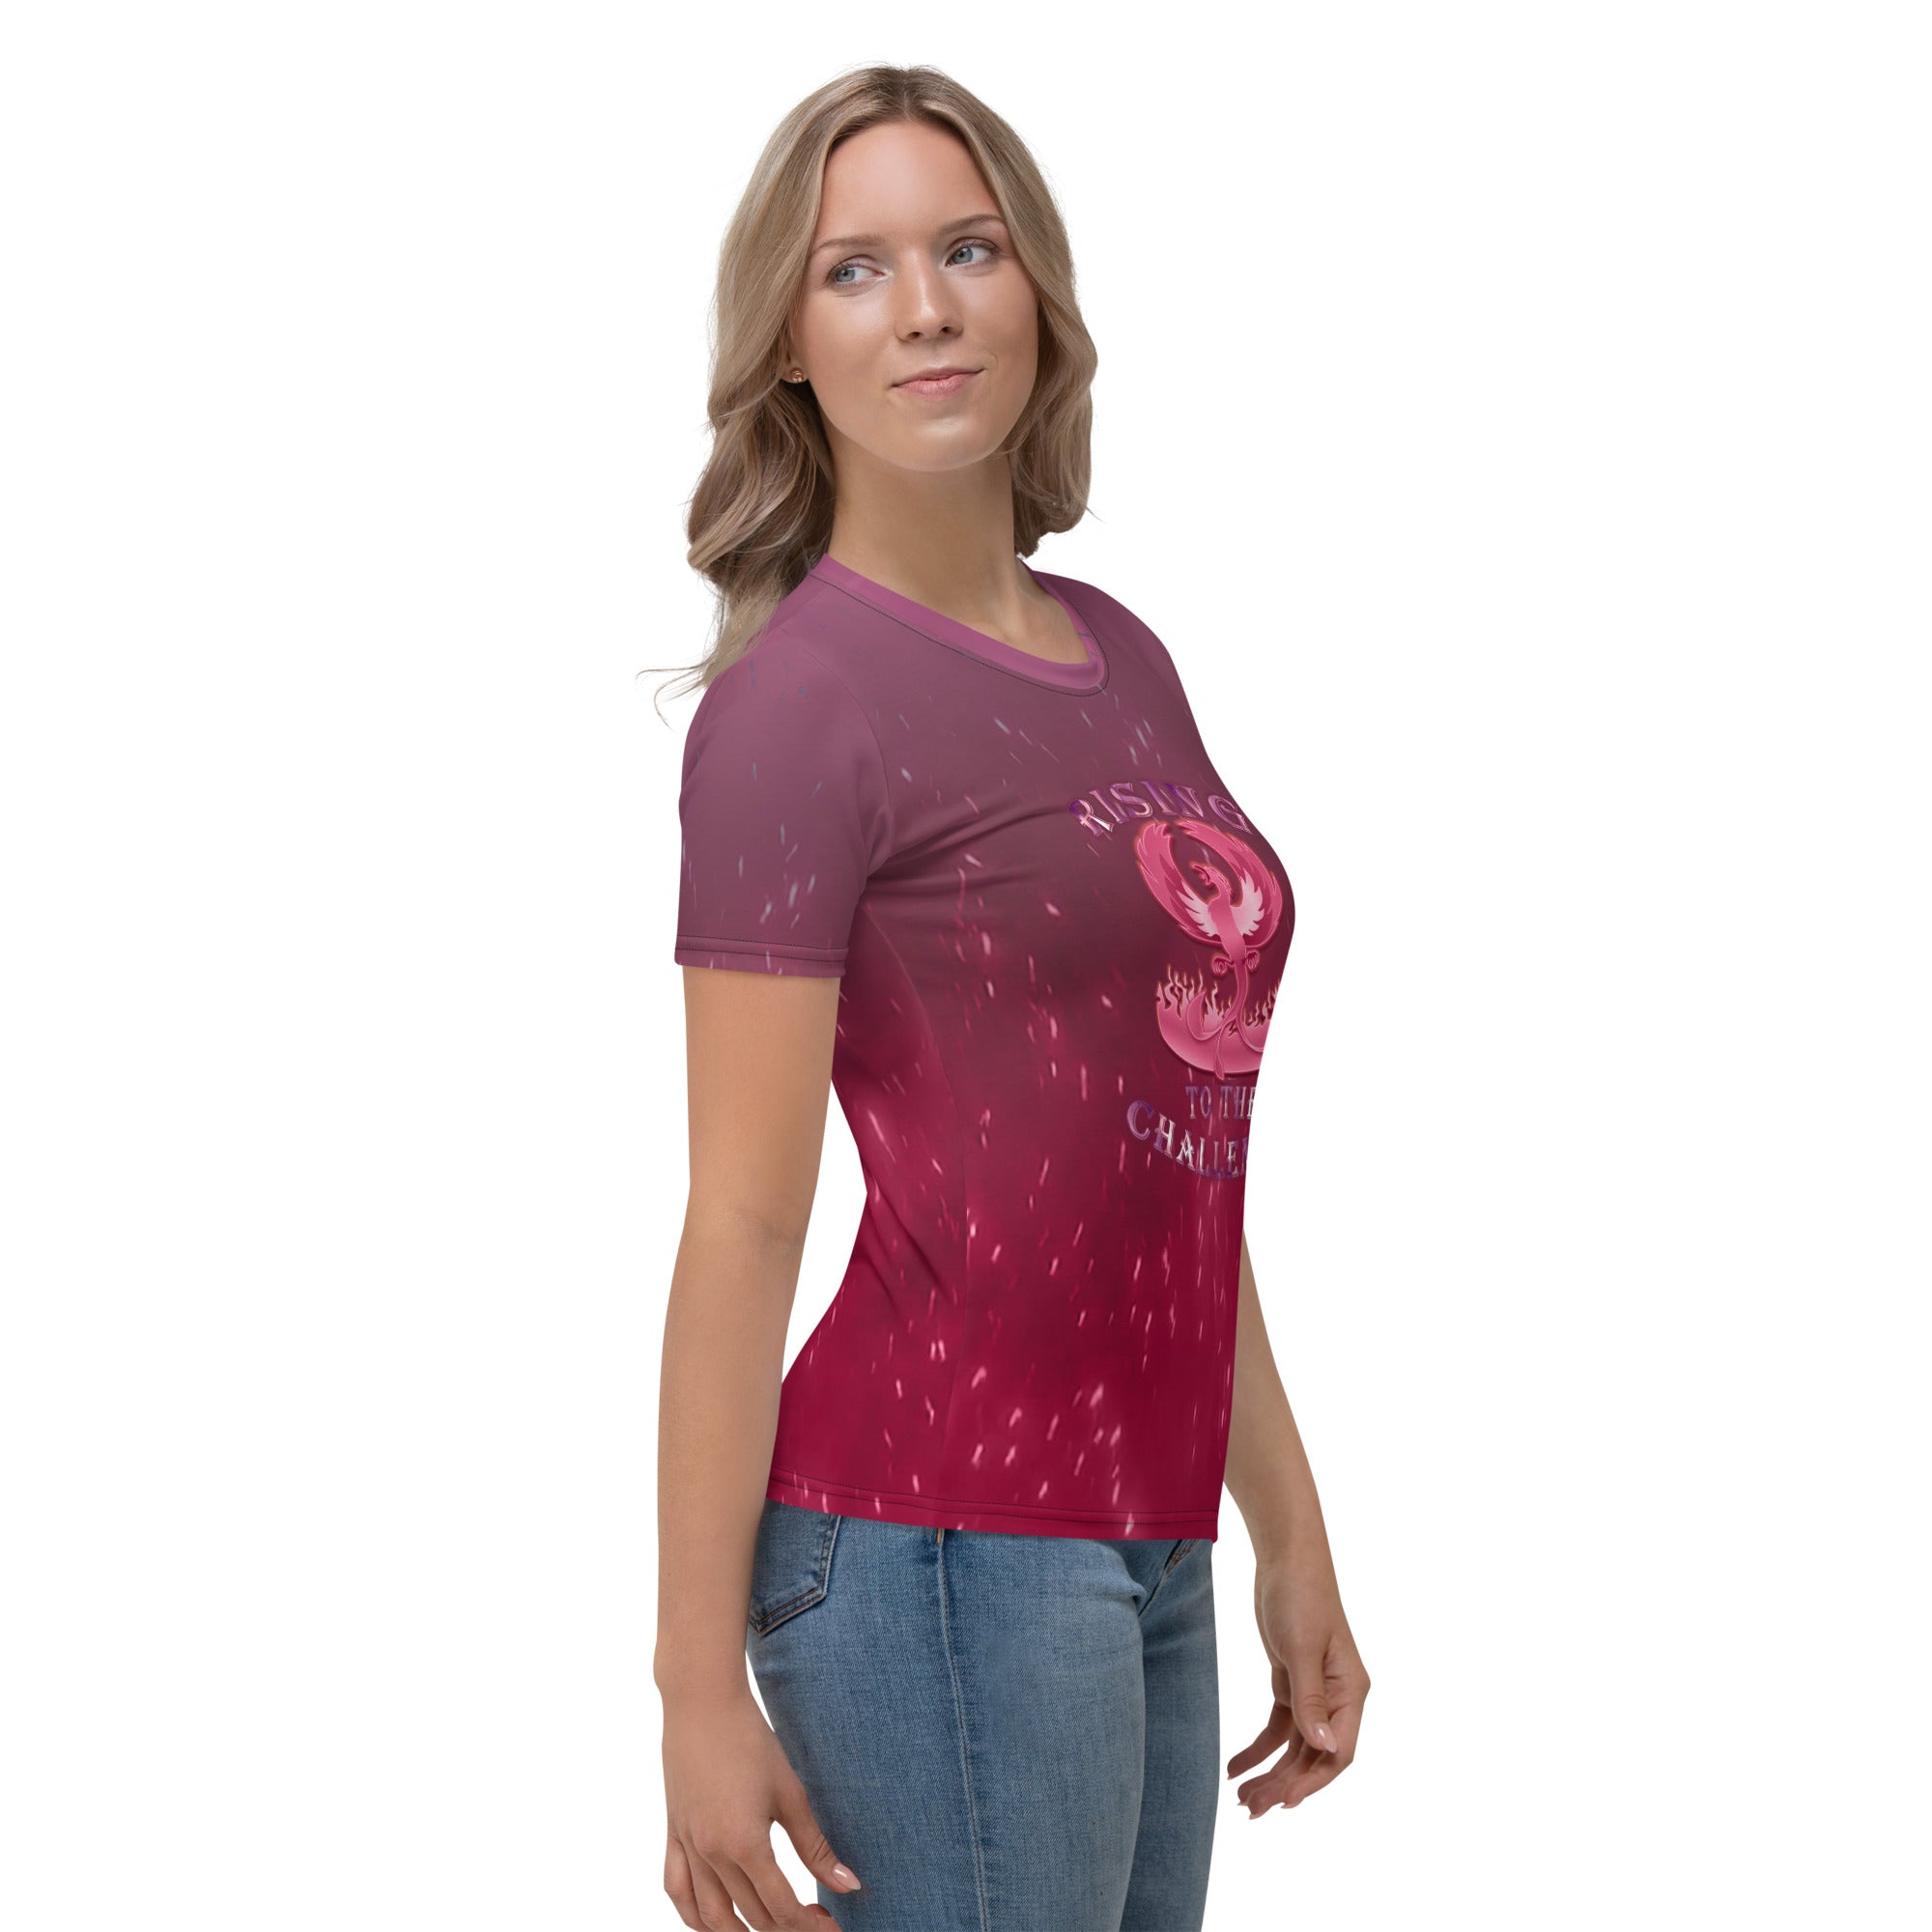 Pink Phoenix Women's T-shirt